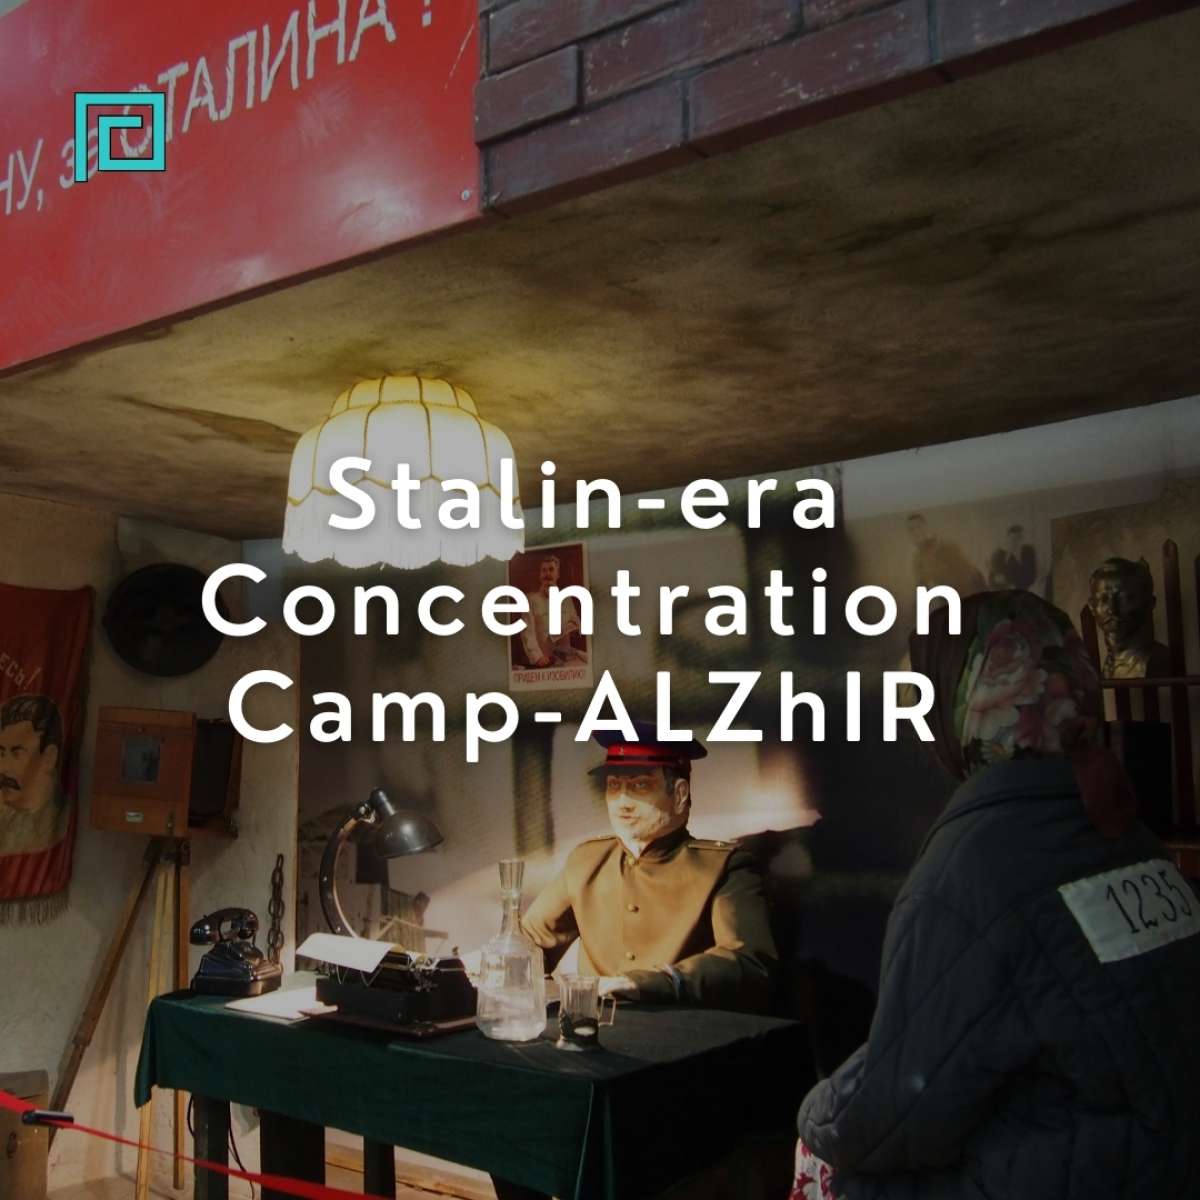 Stalin-era Concentration Camp-ALZhIR